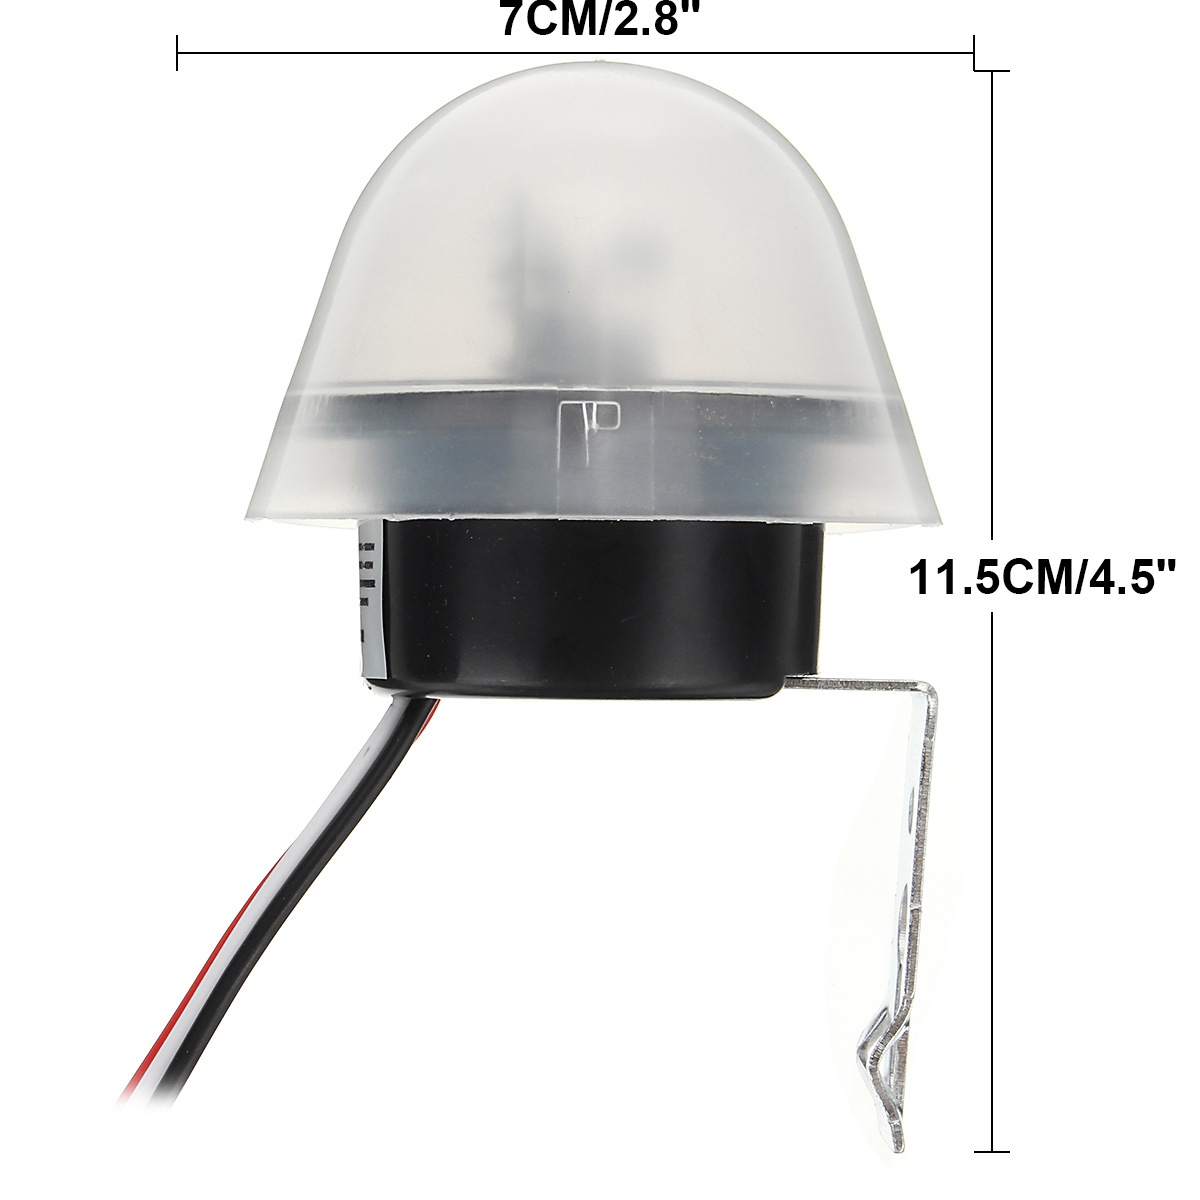 Photoswitch-Sensor-Switch-Control-Street-Light-Lamp-Auto-On-Off-Photocell-220V-1571327